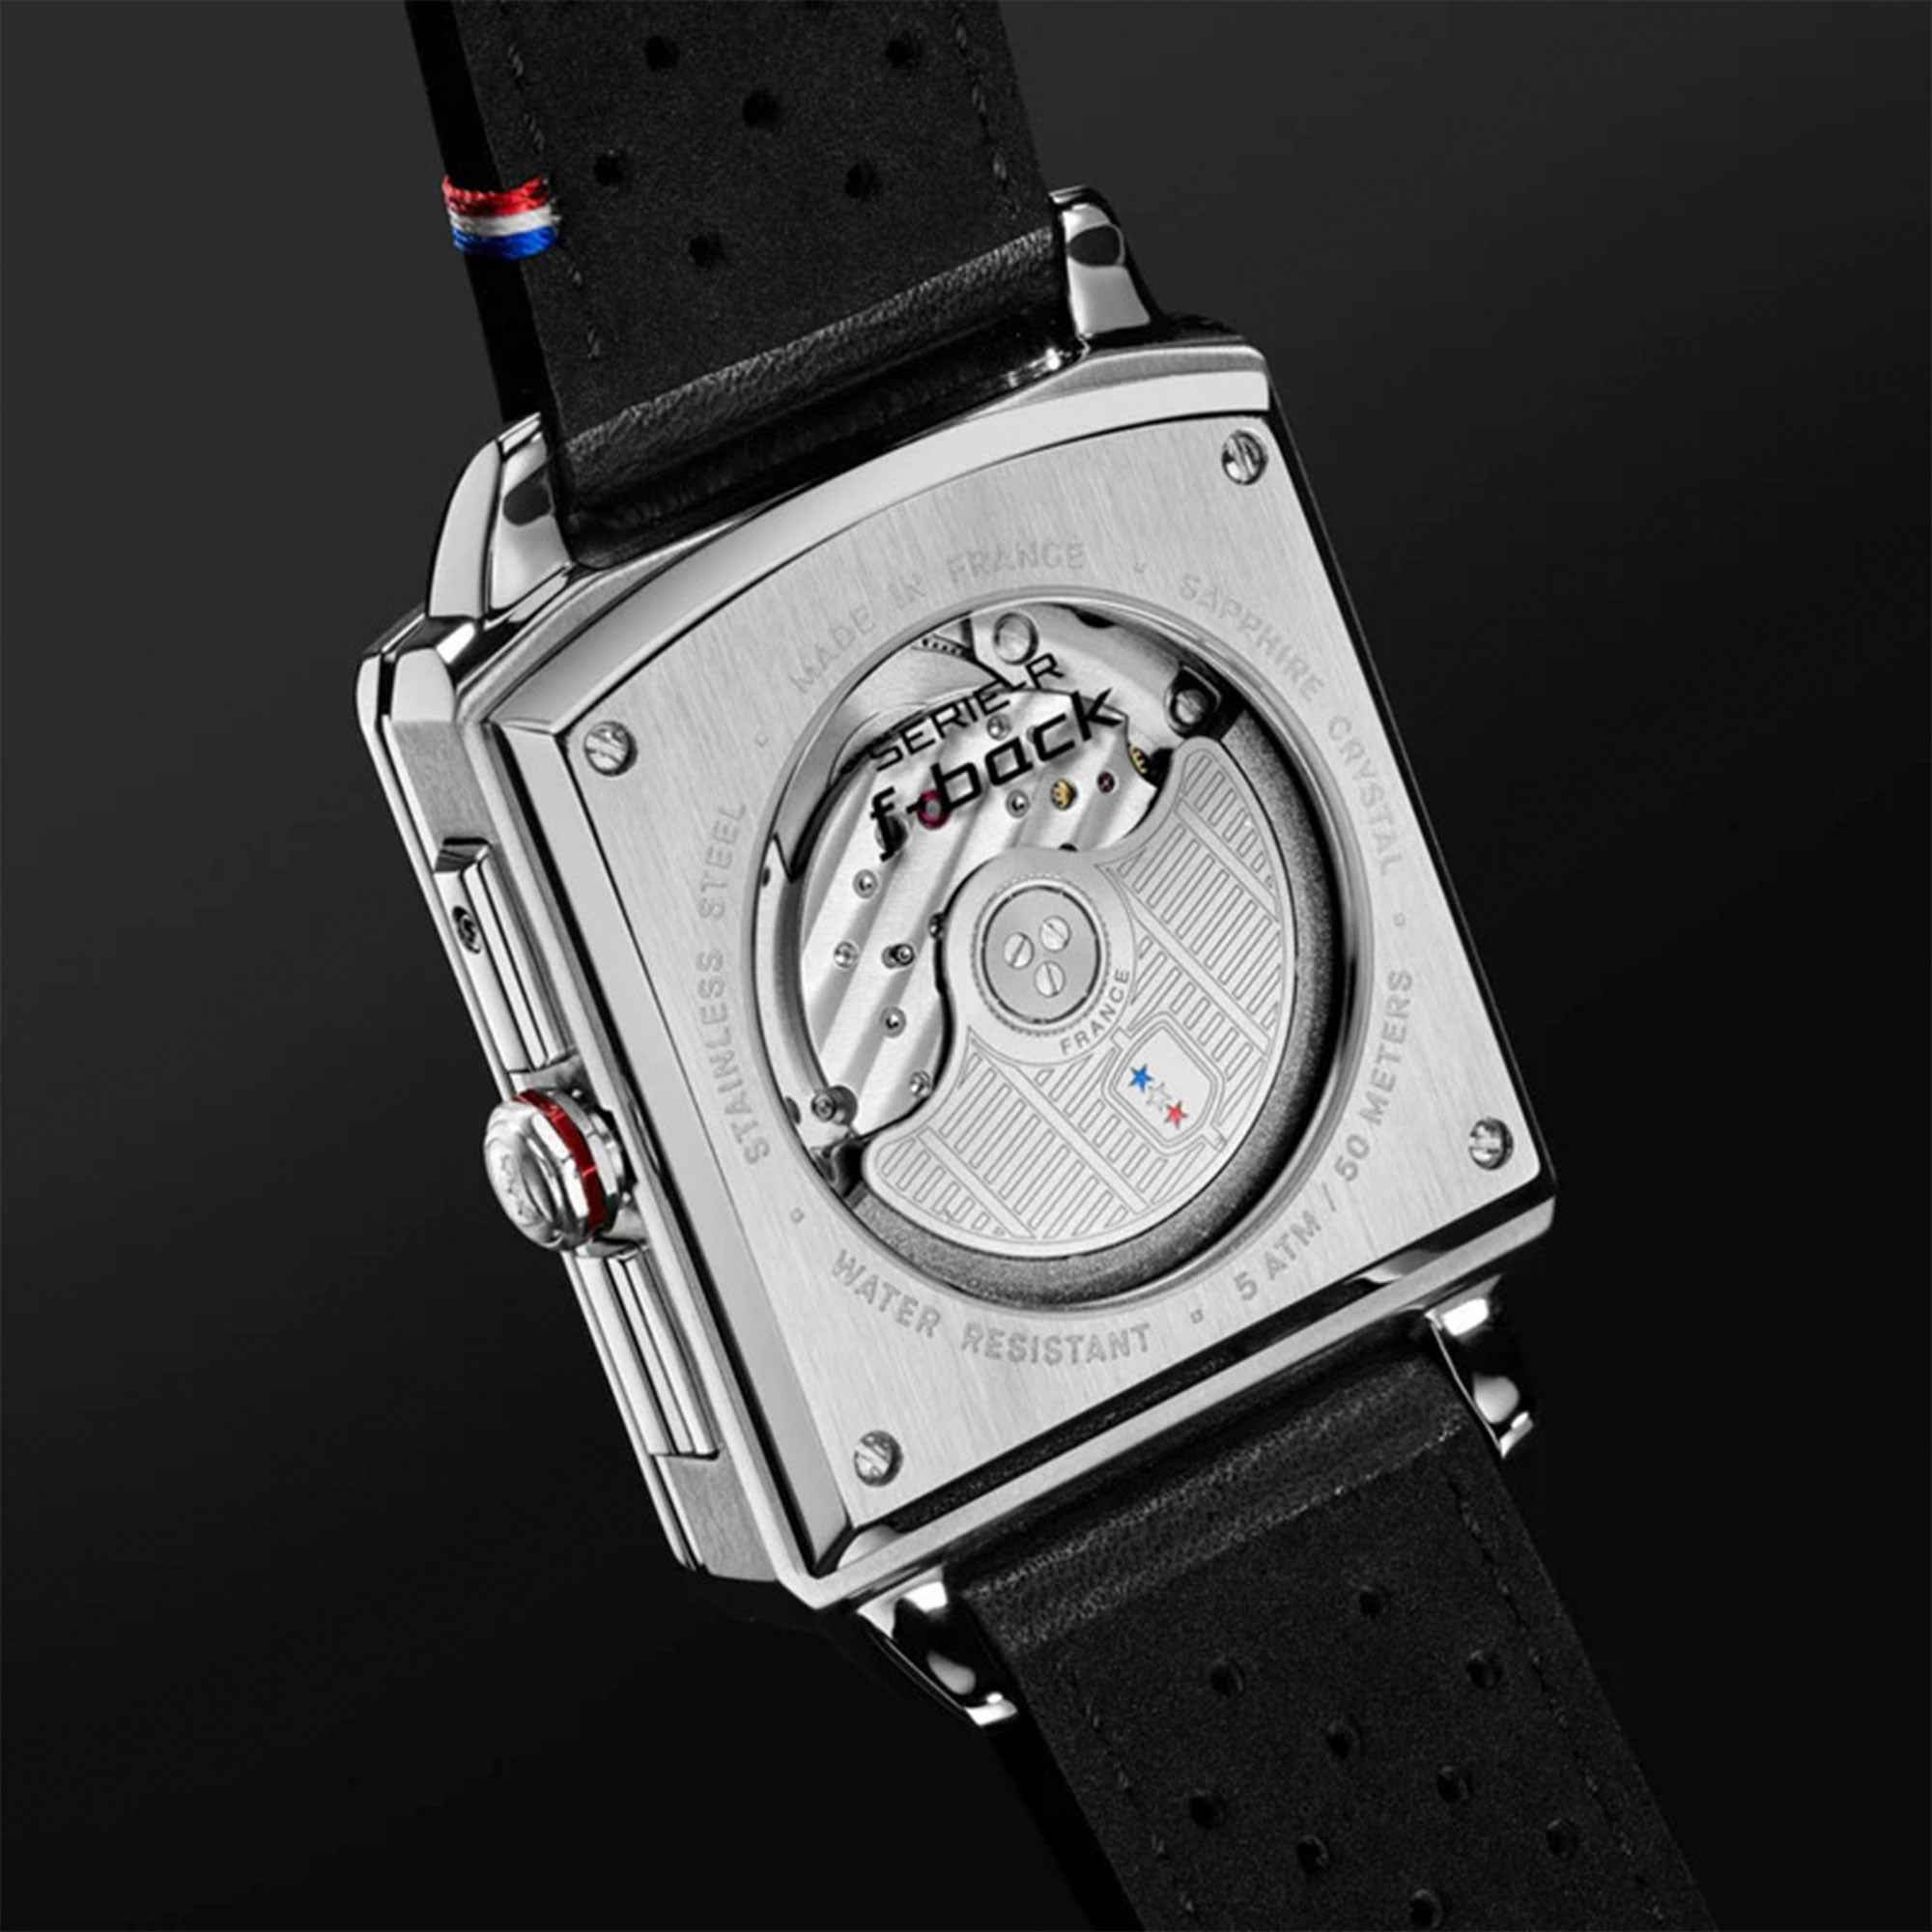 Depancel | Serie-R F-Back Rising White-Watch-Depancel-gpx-store